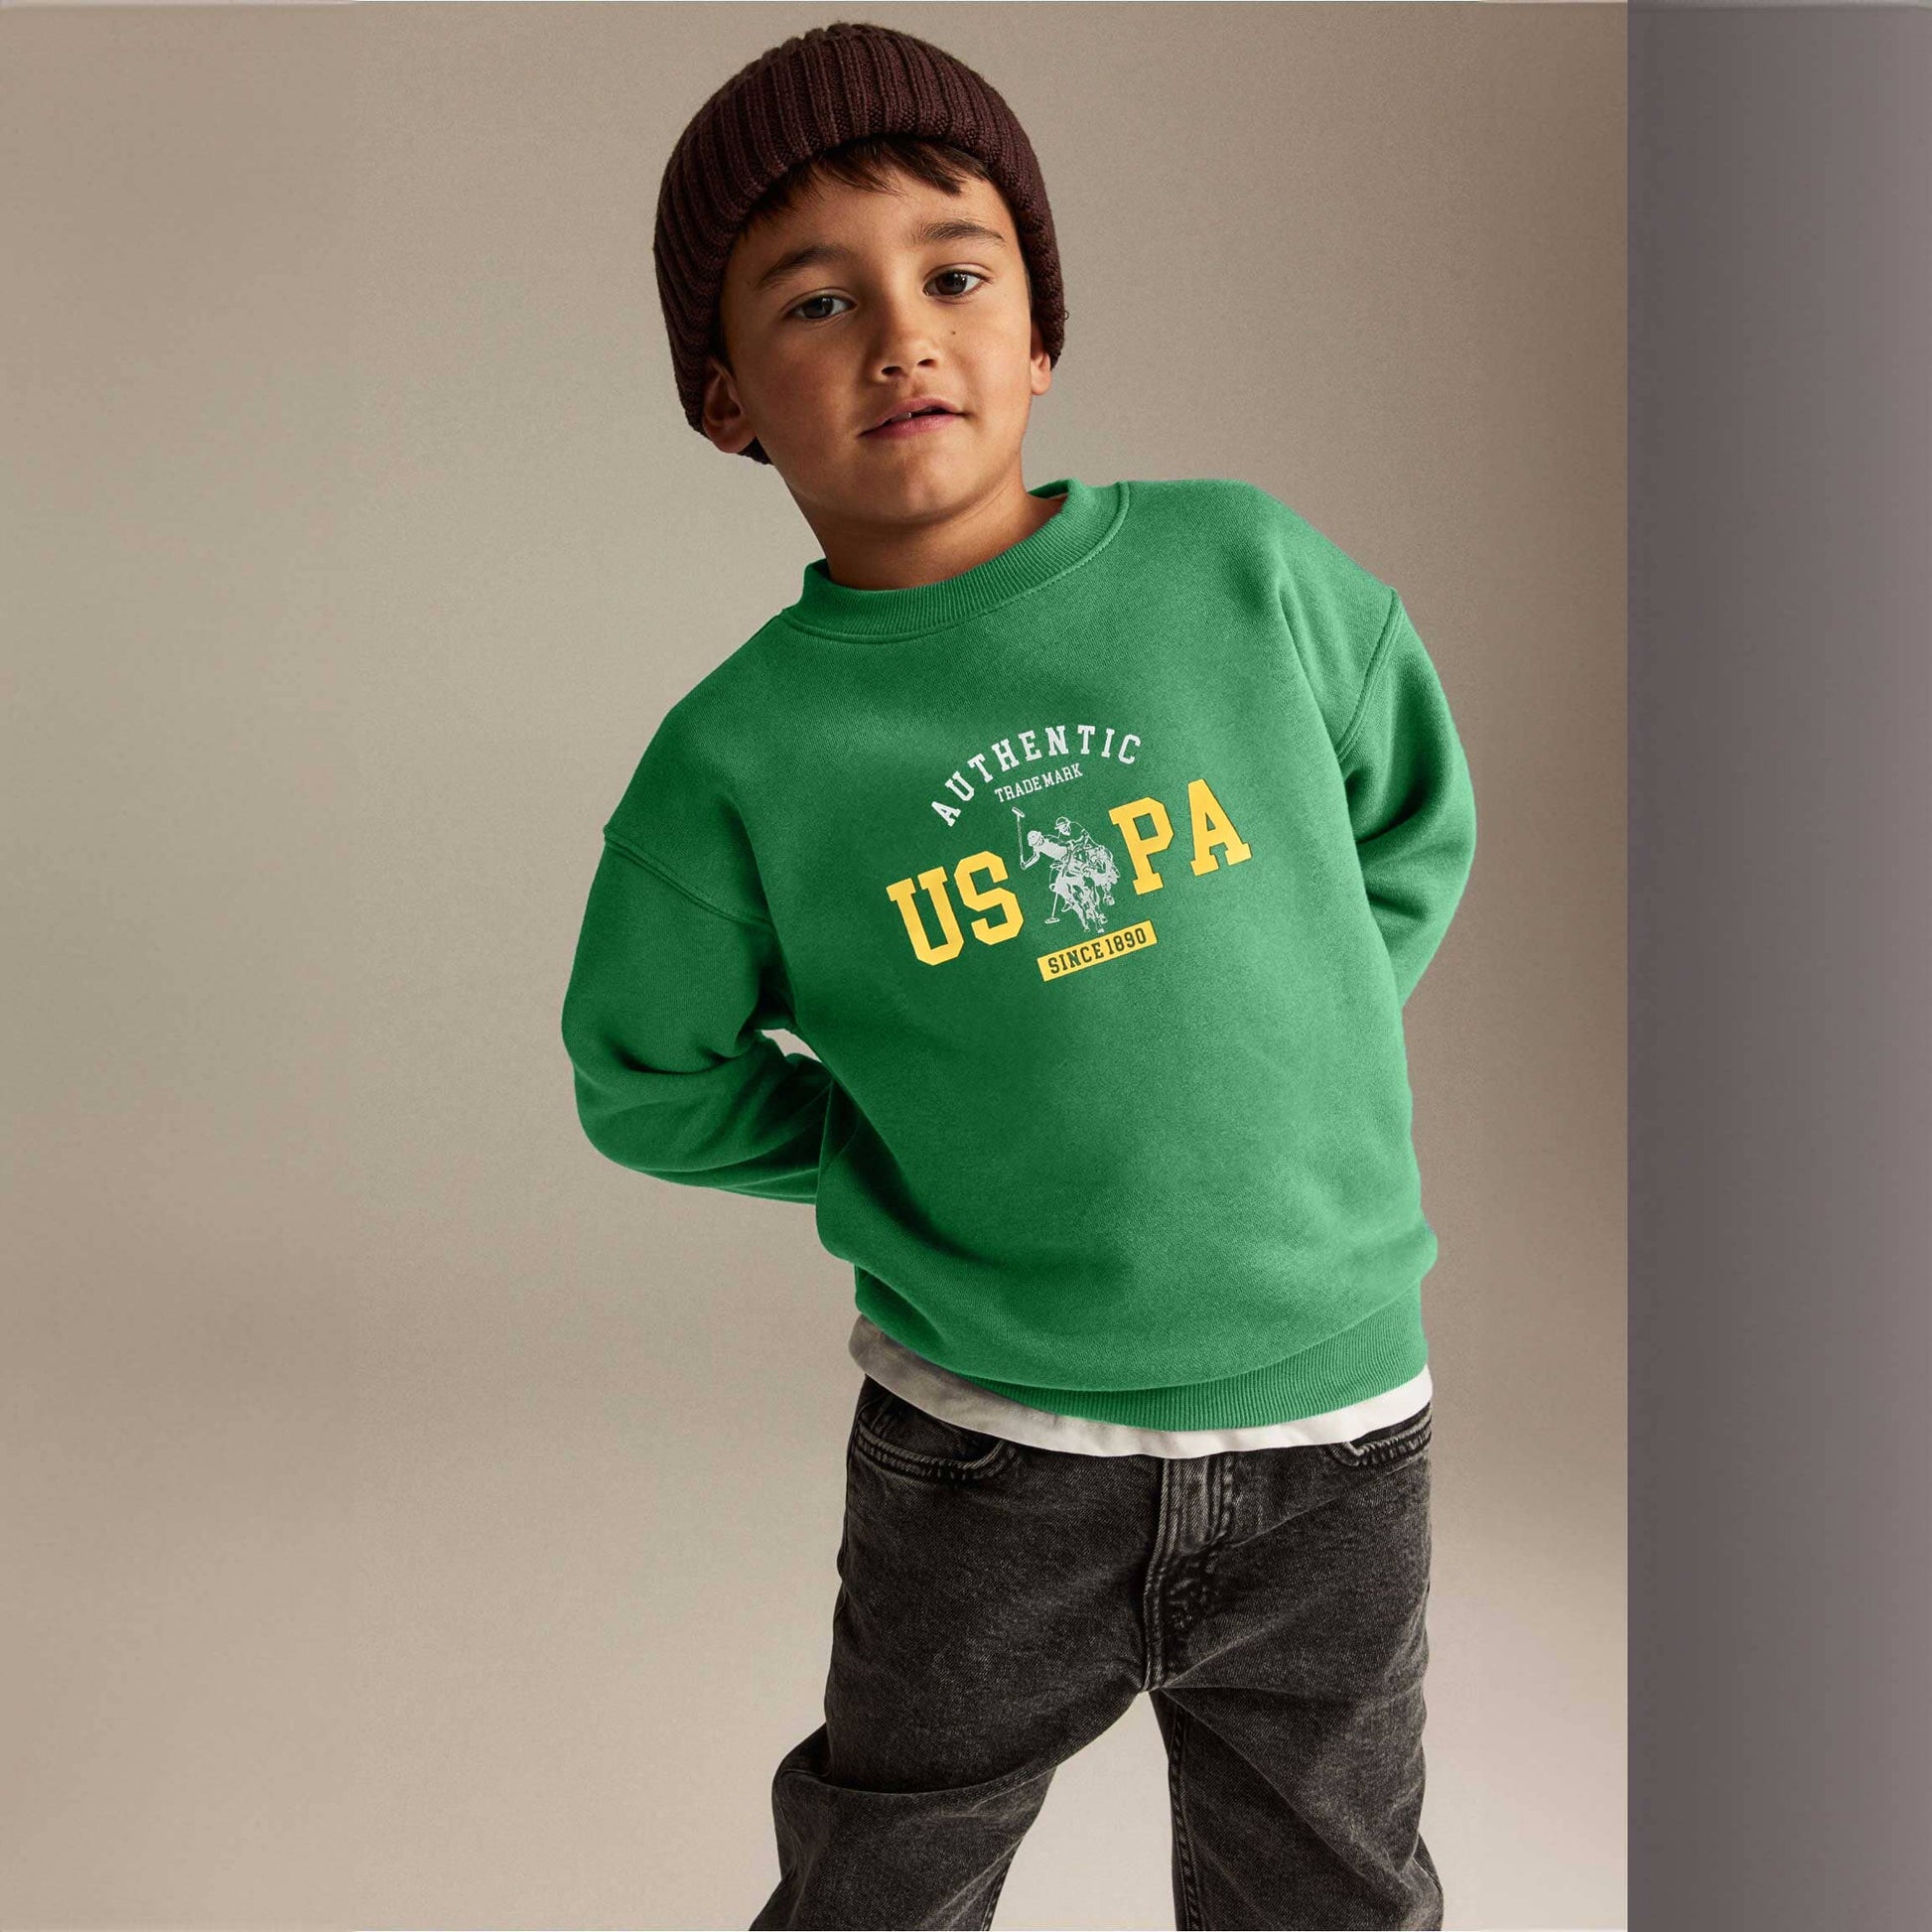 USPA Kid's Authentic US Printed Fleece Sweat Shirt Kid's Sweat Shirt Fiza Green (XS) 2-3 Years 